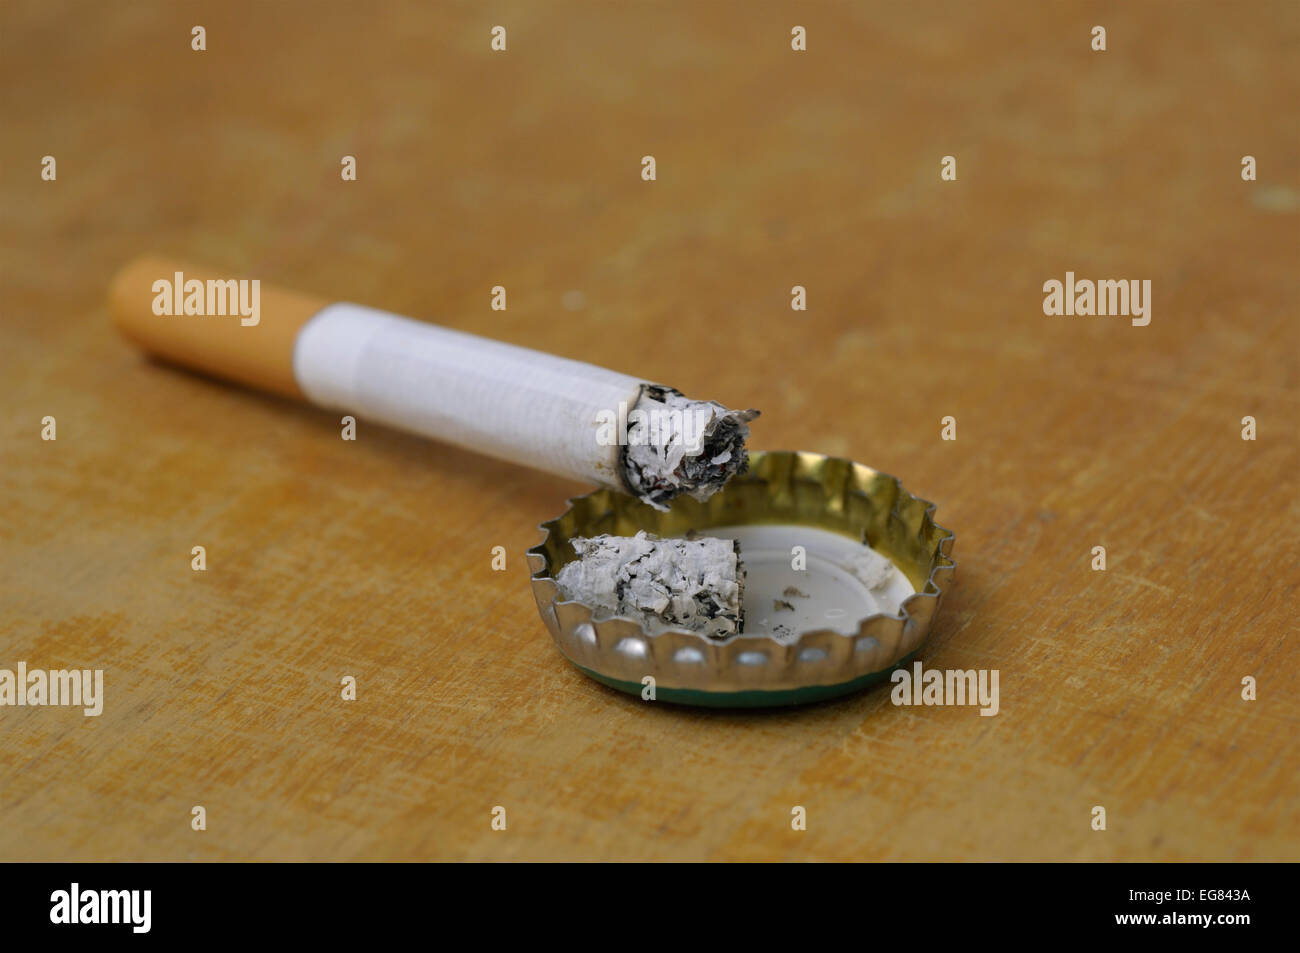 Cigarette ash on crown cap Stock Photo